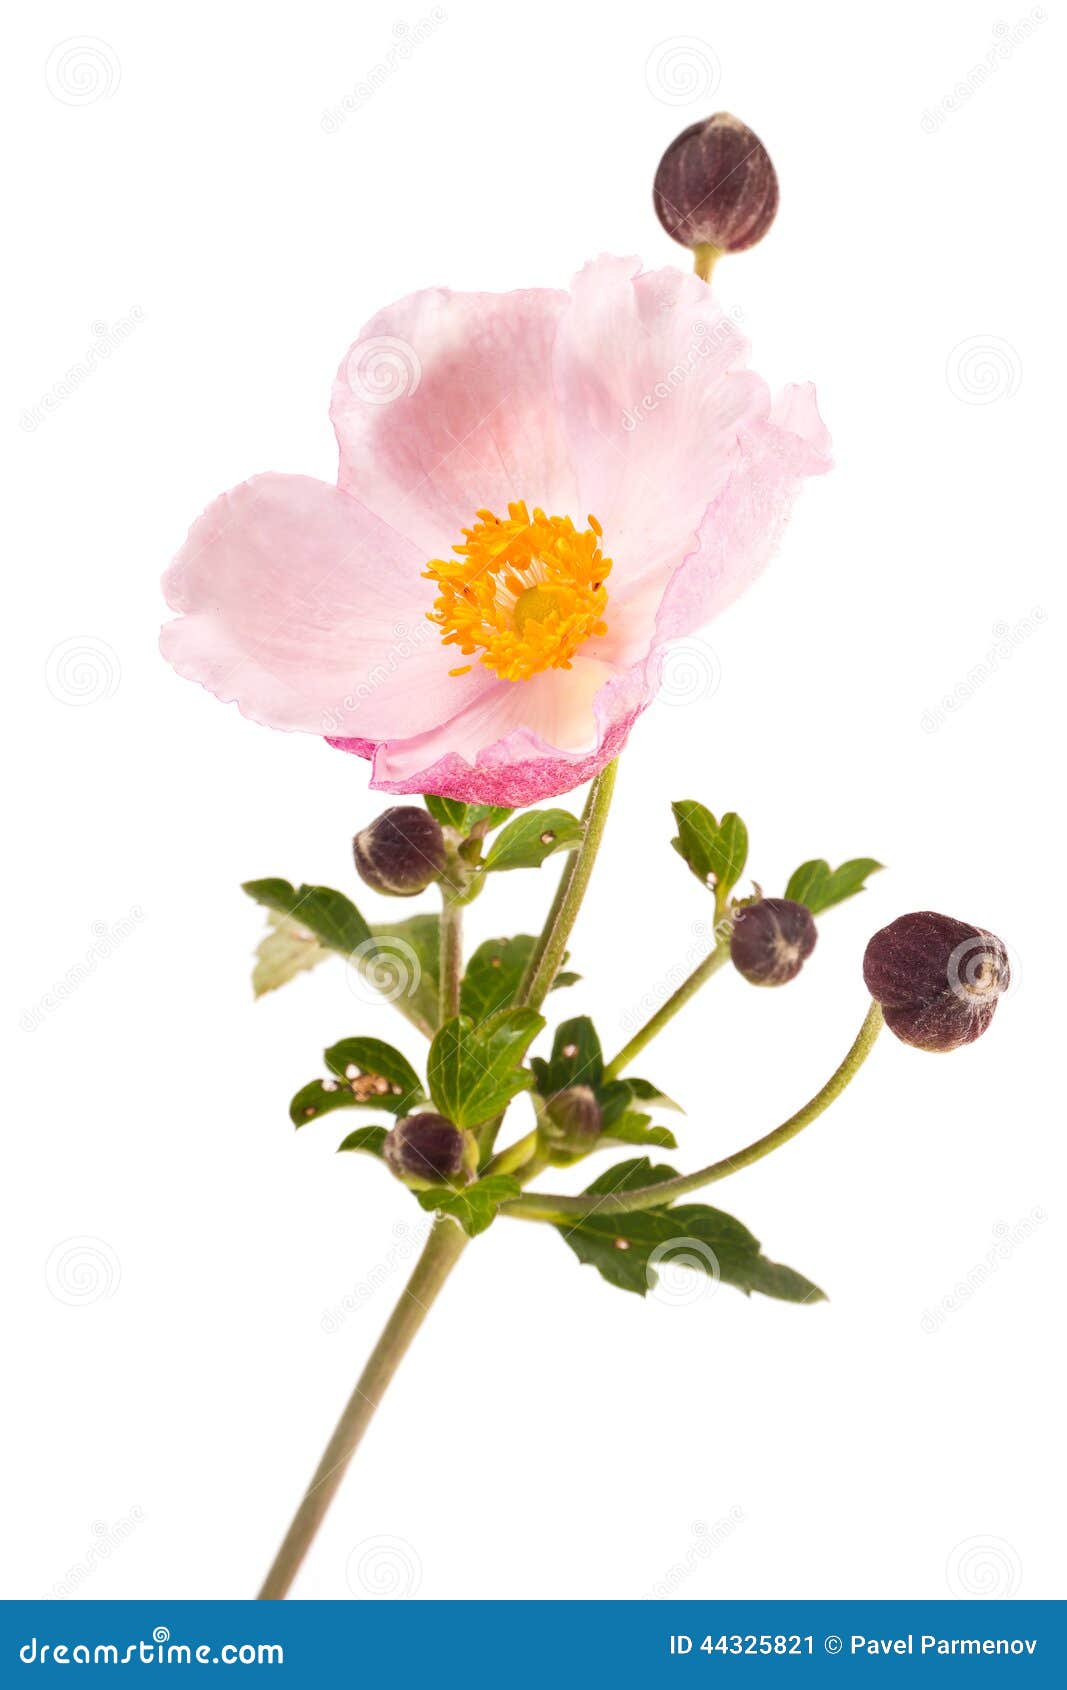 Flower is Anemone stock image. Image of spring, season - 44325821